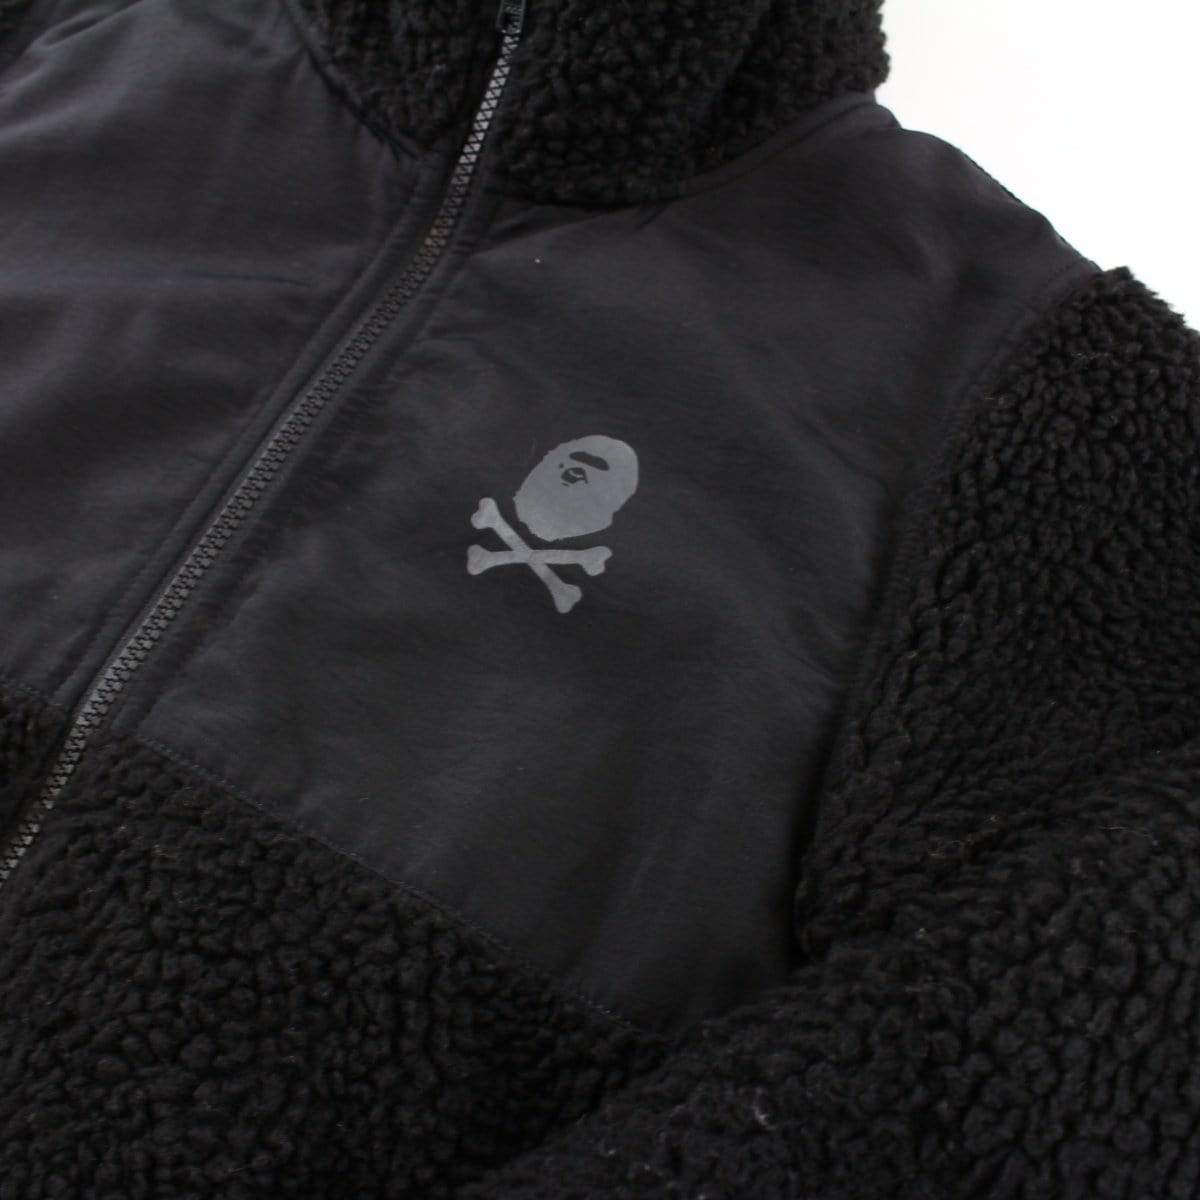 Bape Pirate Store Crossbones Fleece Black - SaruGeneral